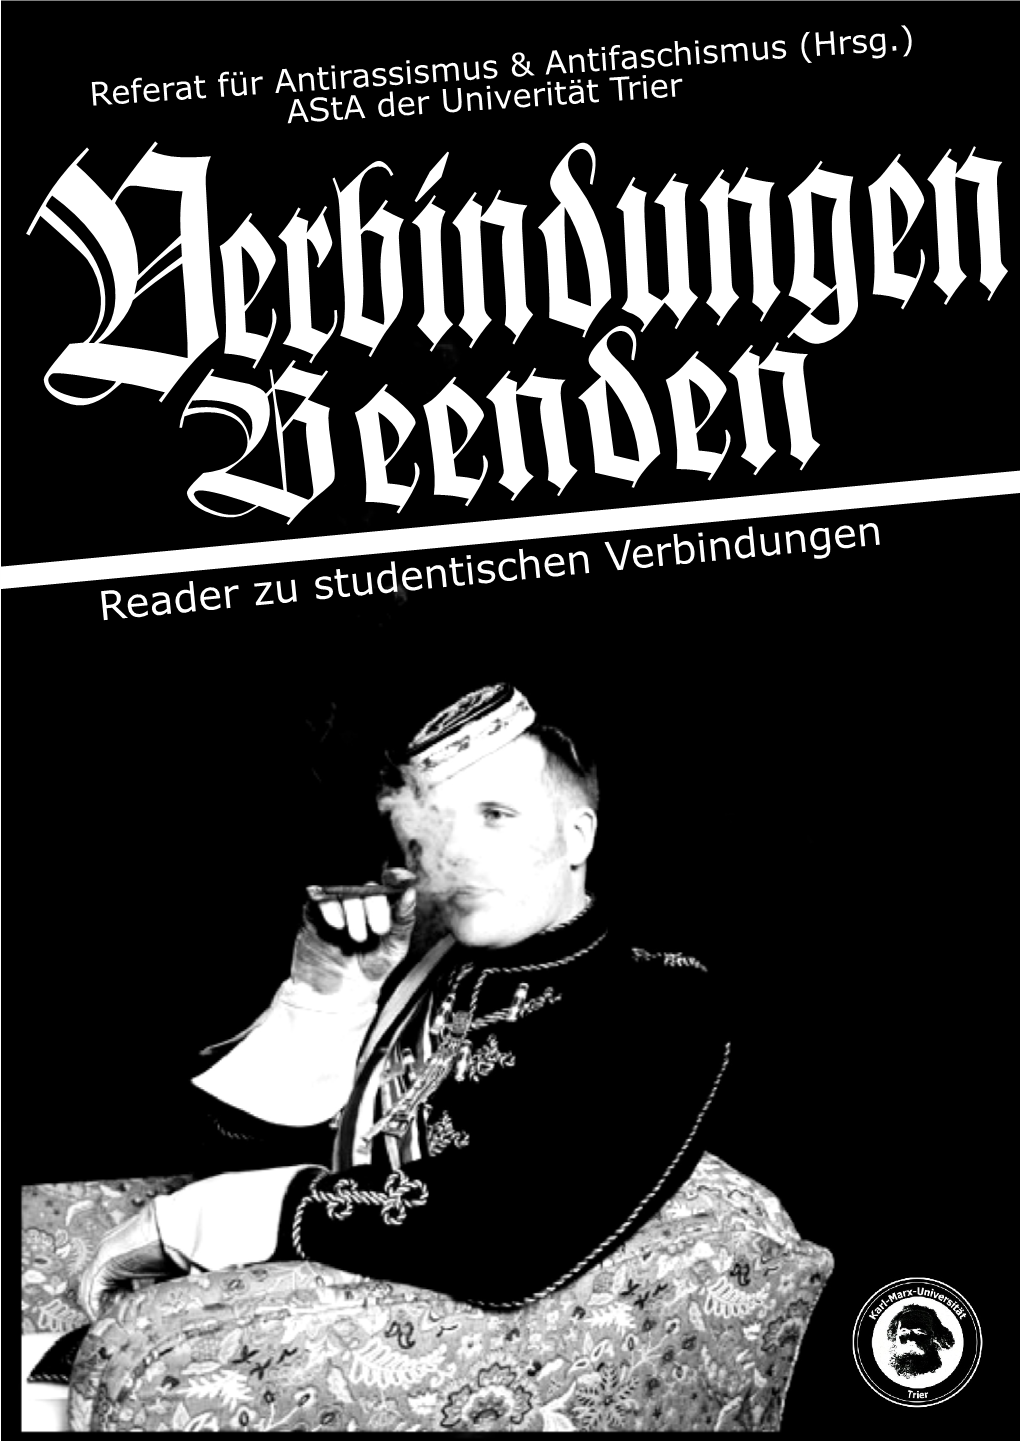 Verbindungen Beenden! Trier, 2007